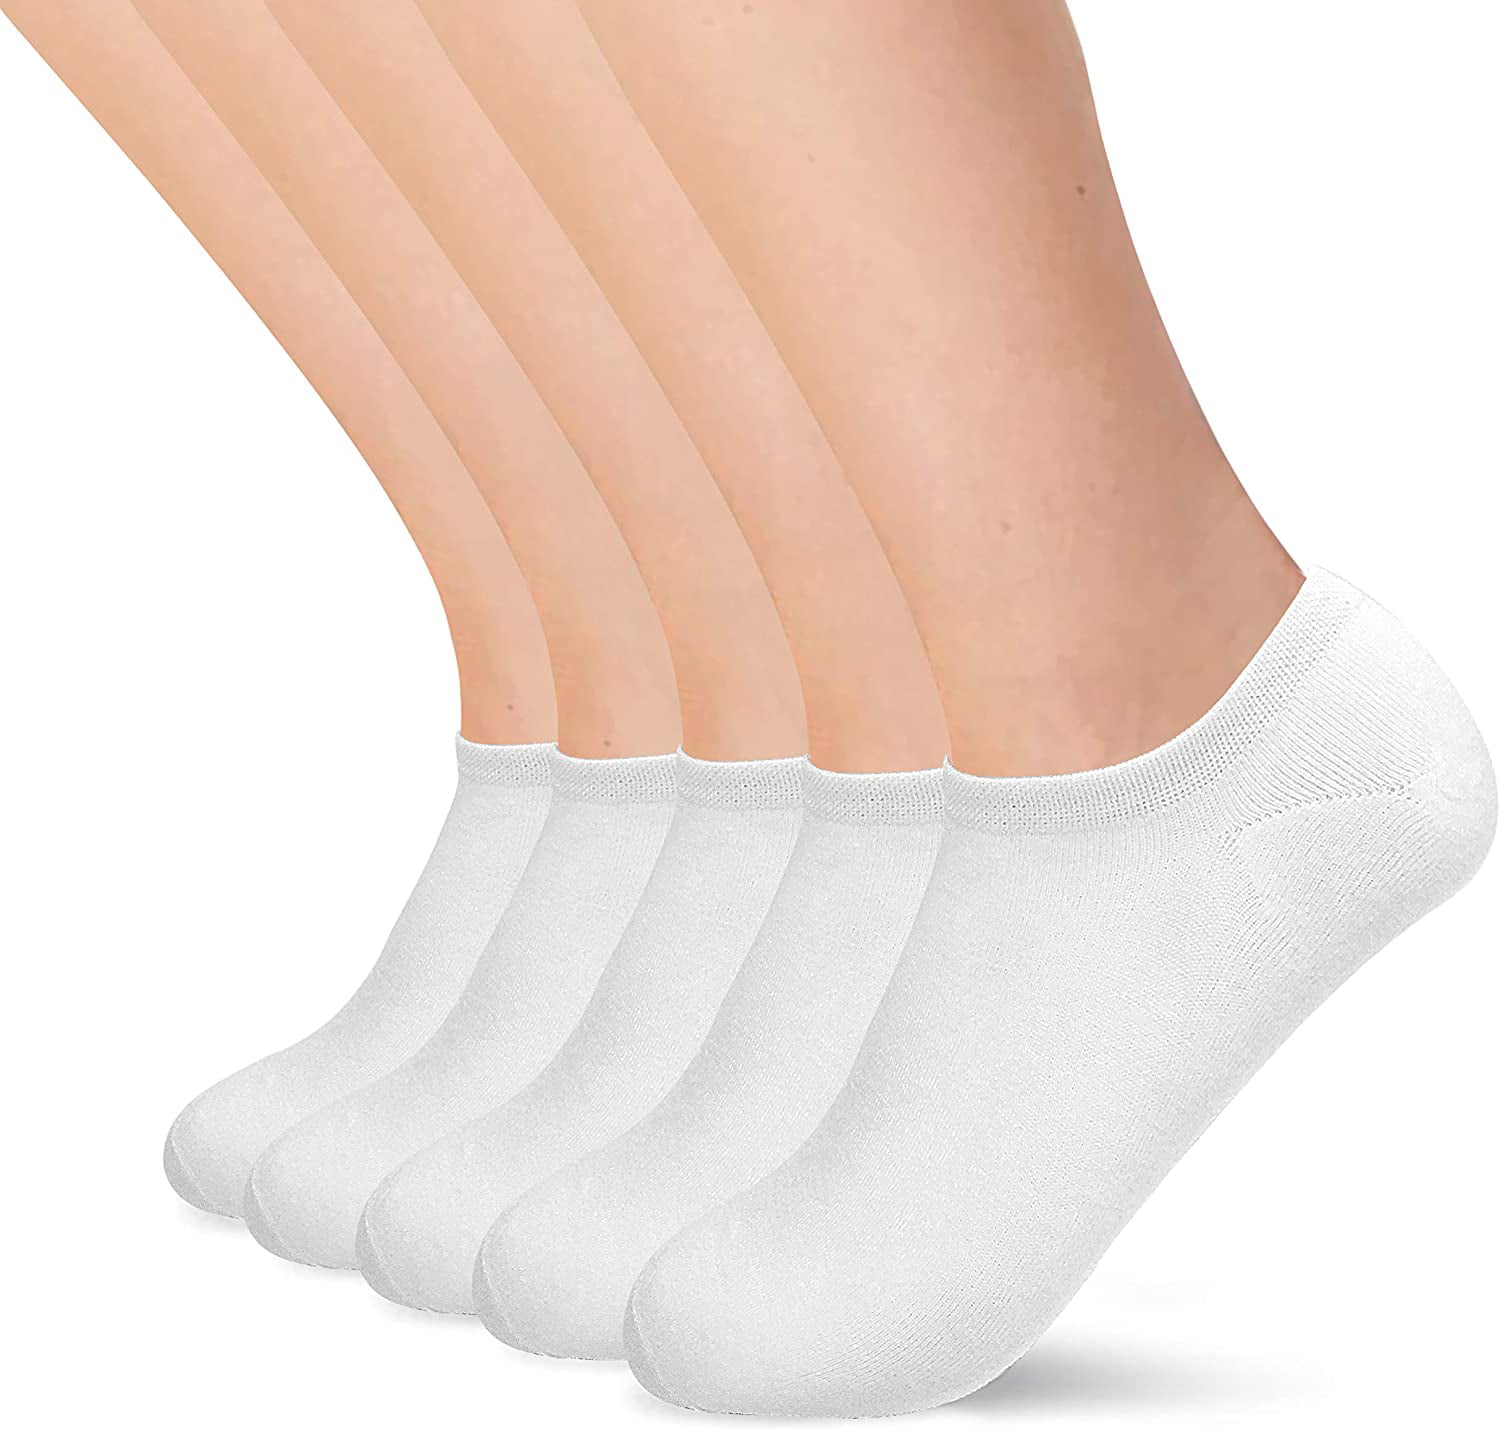 WT for Women Ankle/Quarter Crew Soft Socks Cotton Low Cut Size 9-11 6 Pairs 